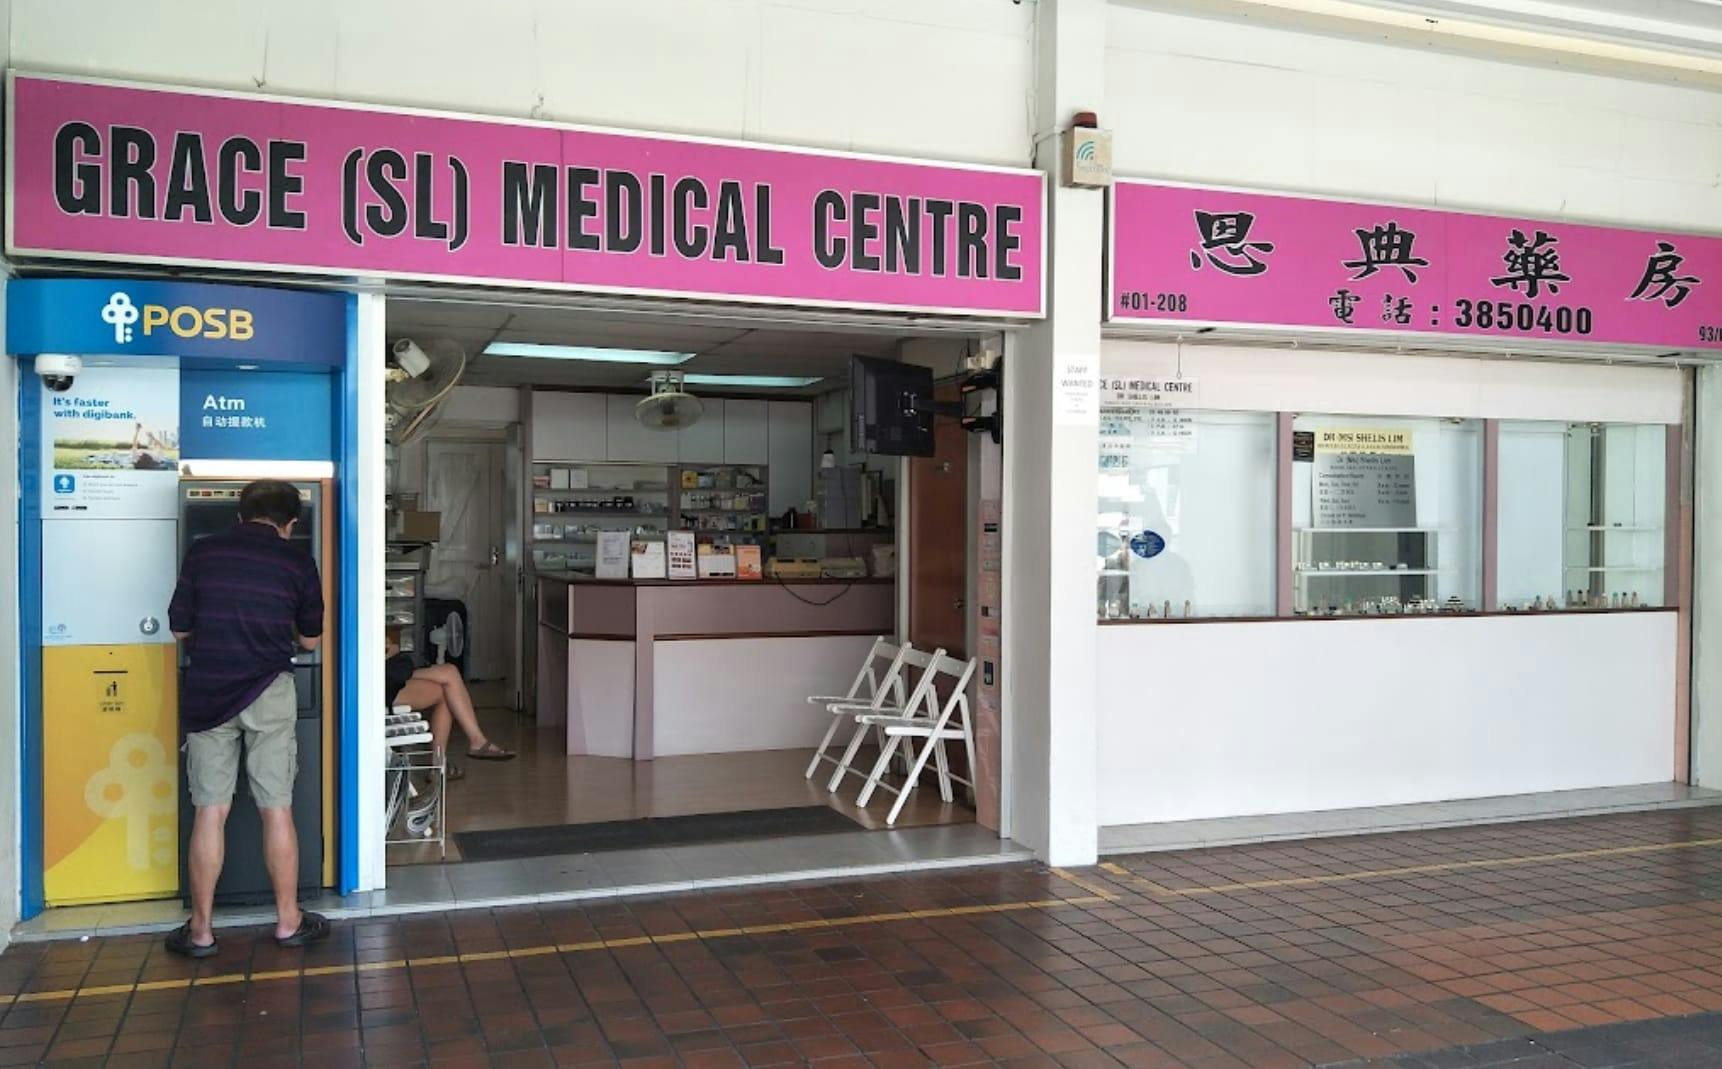 Grace (SL) Medical Centre